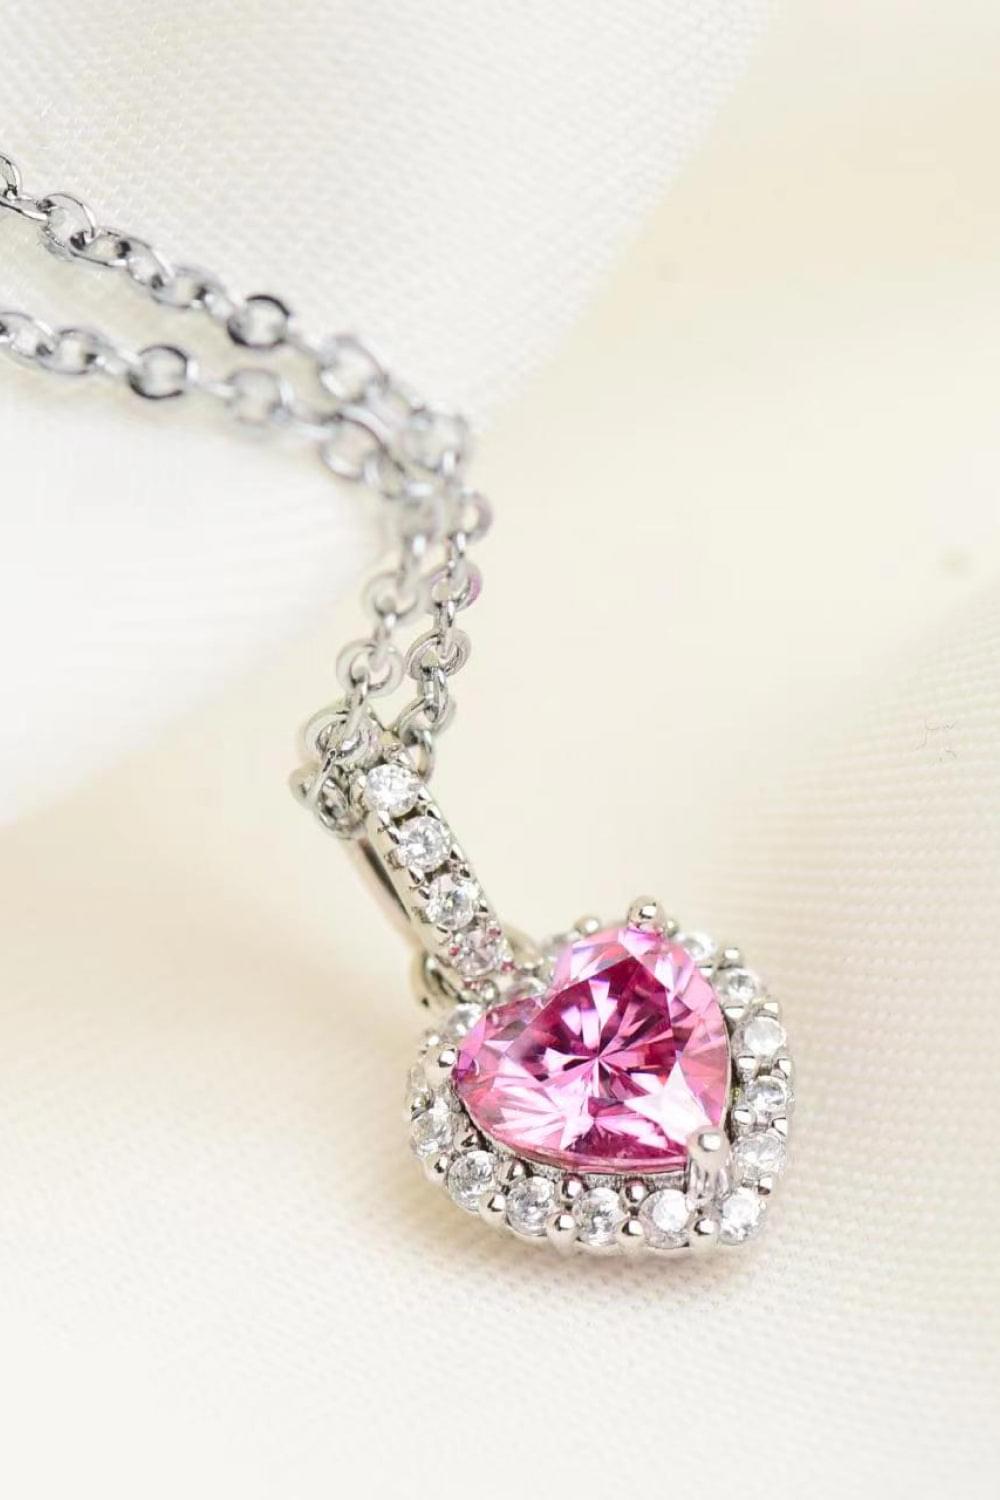 1 Carat Moissanite Heart Pendant Necklace - Necklaces - FITGGINS